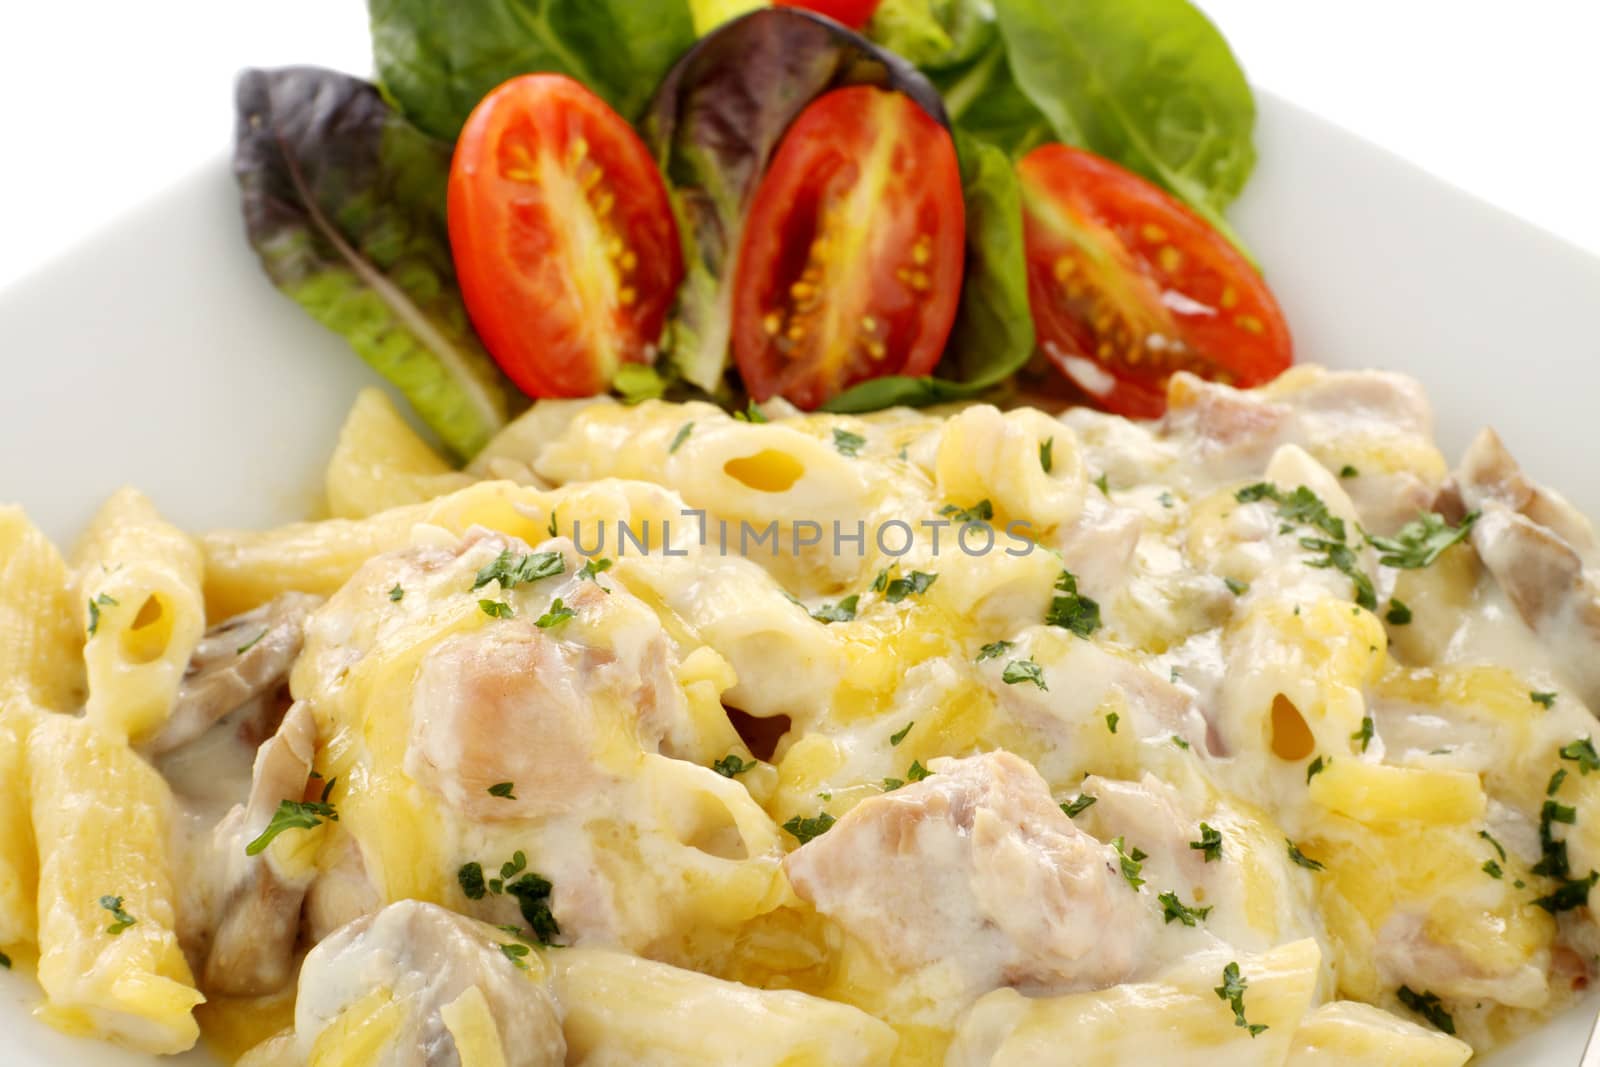 Delicious creamy chicken penne pasta with a garden salad.